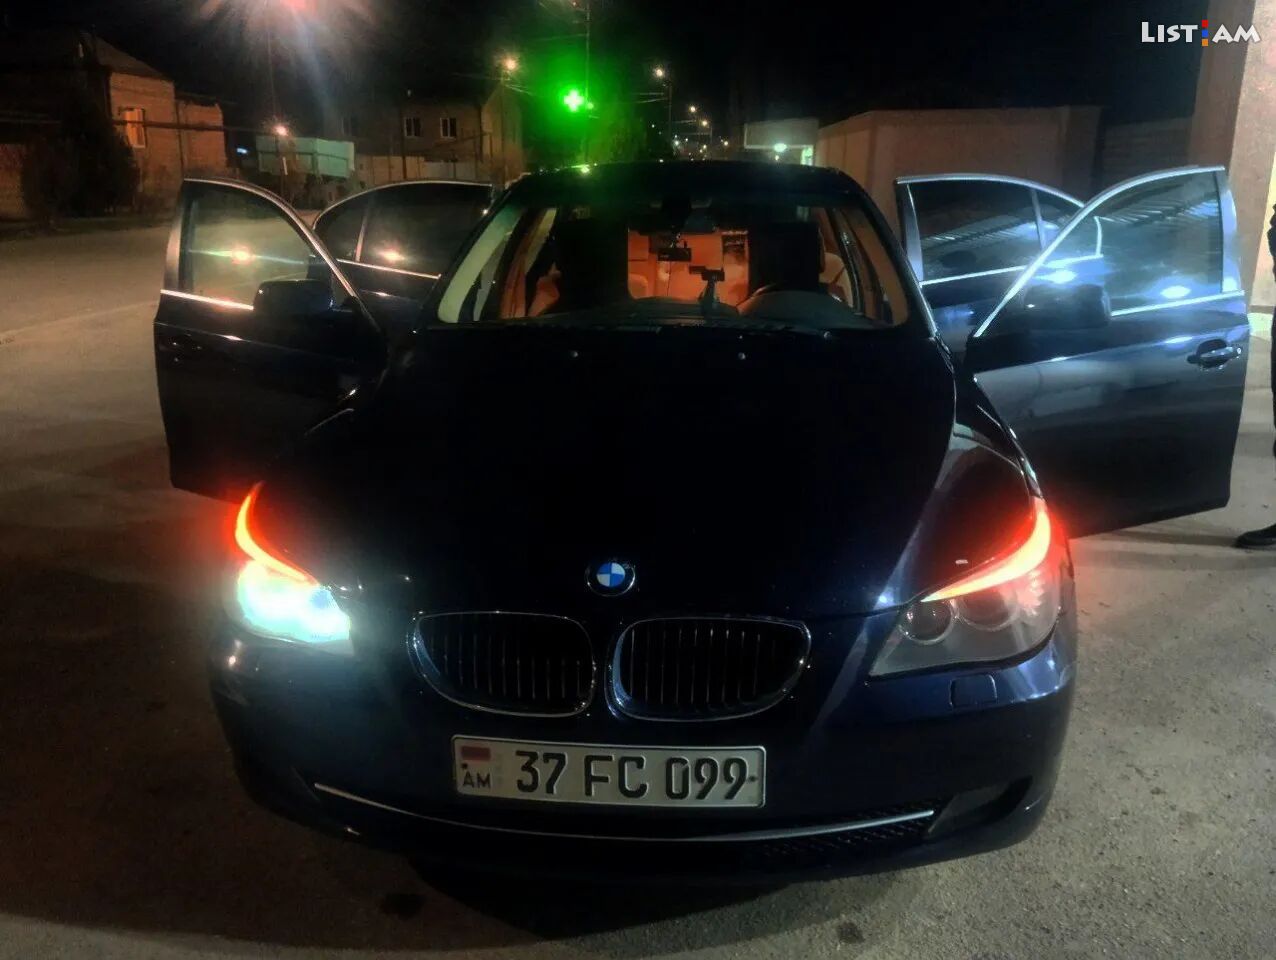 BMW 5 Series, 3.0